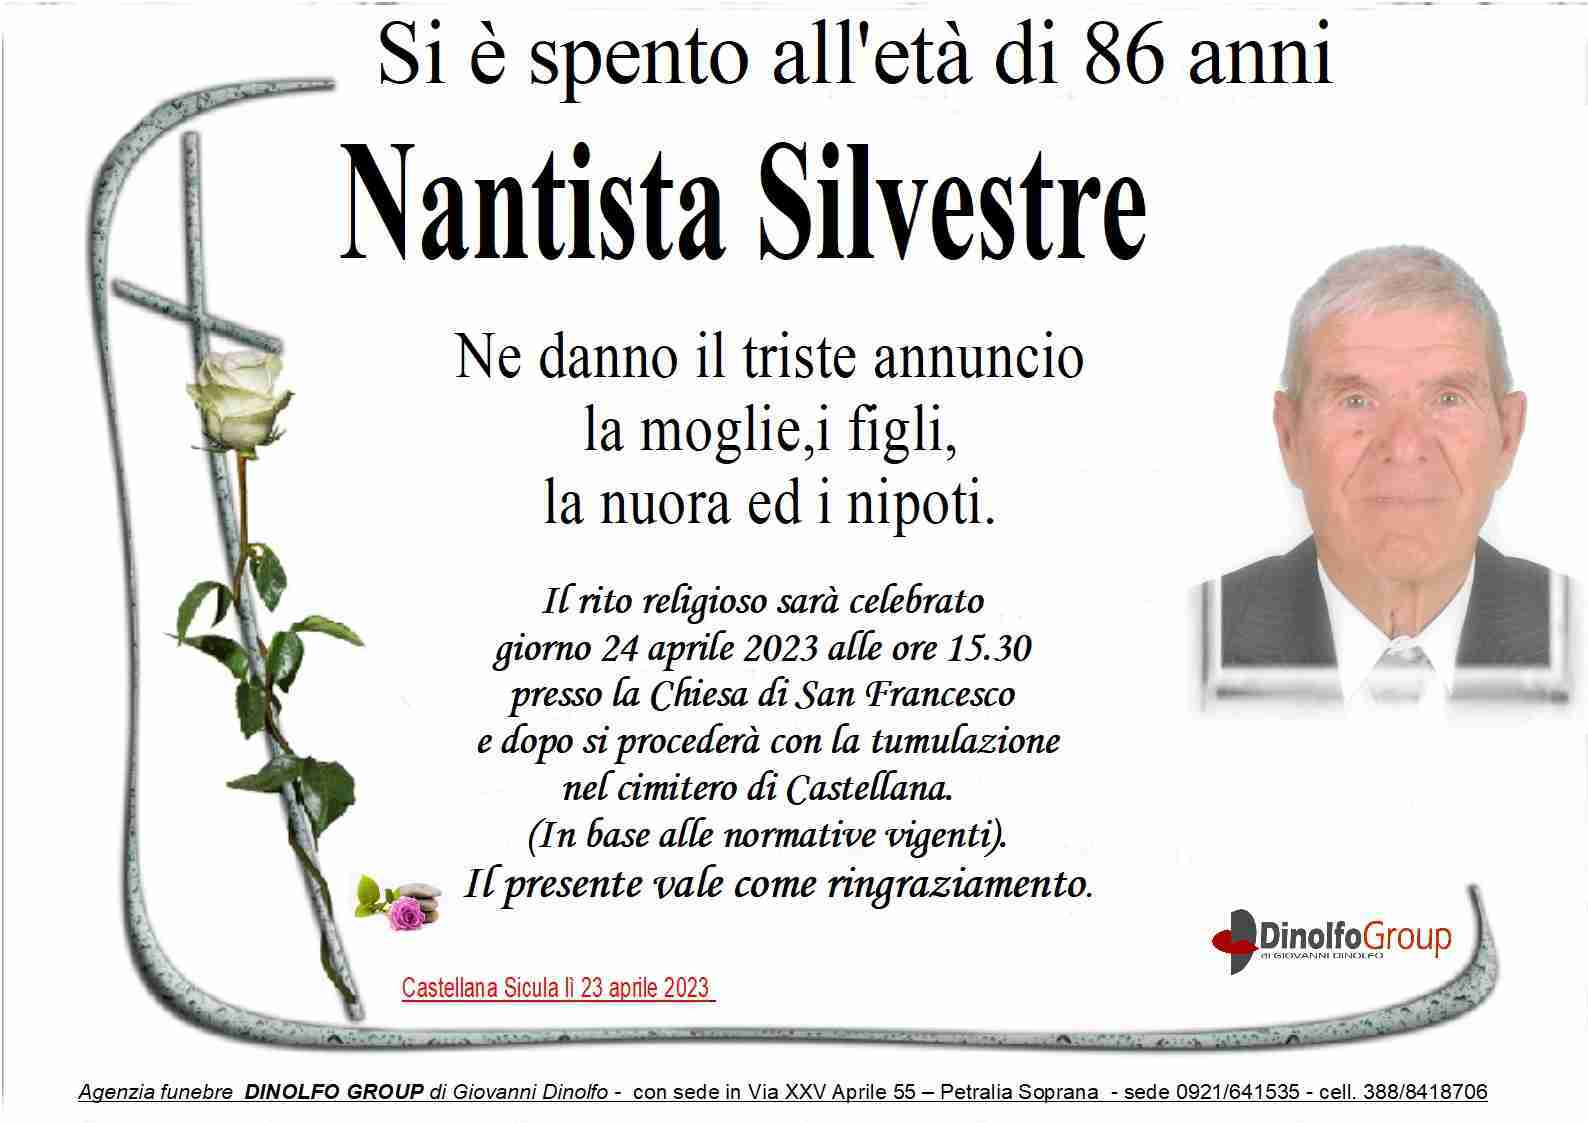 Silvestre Nantista